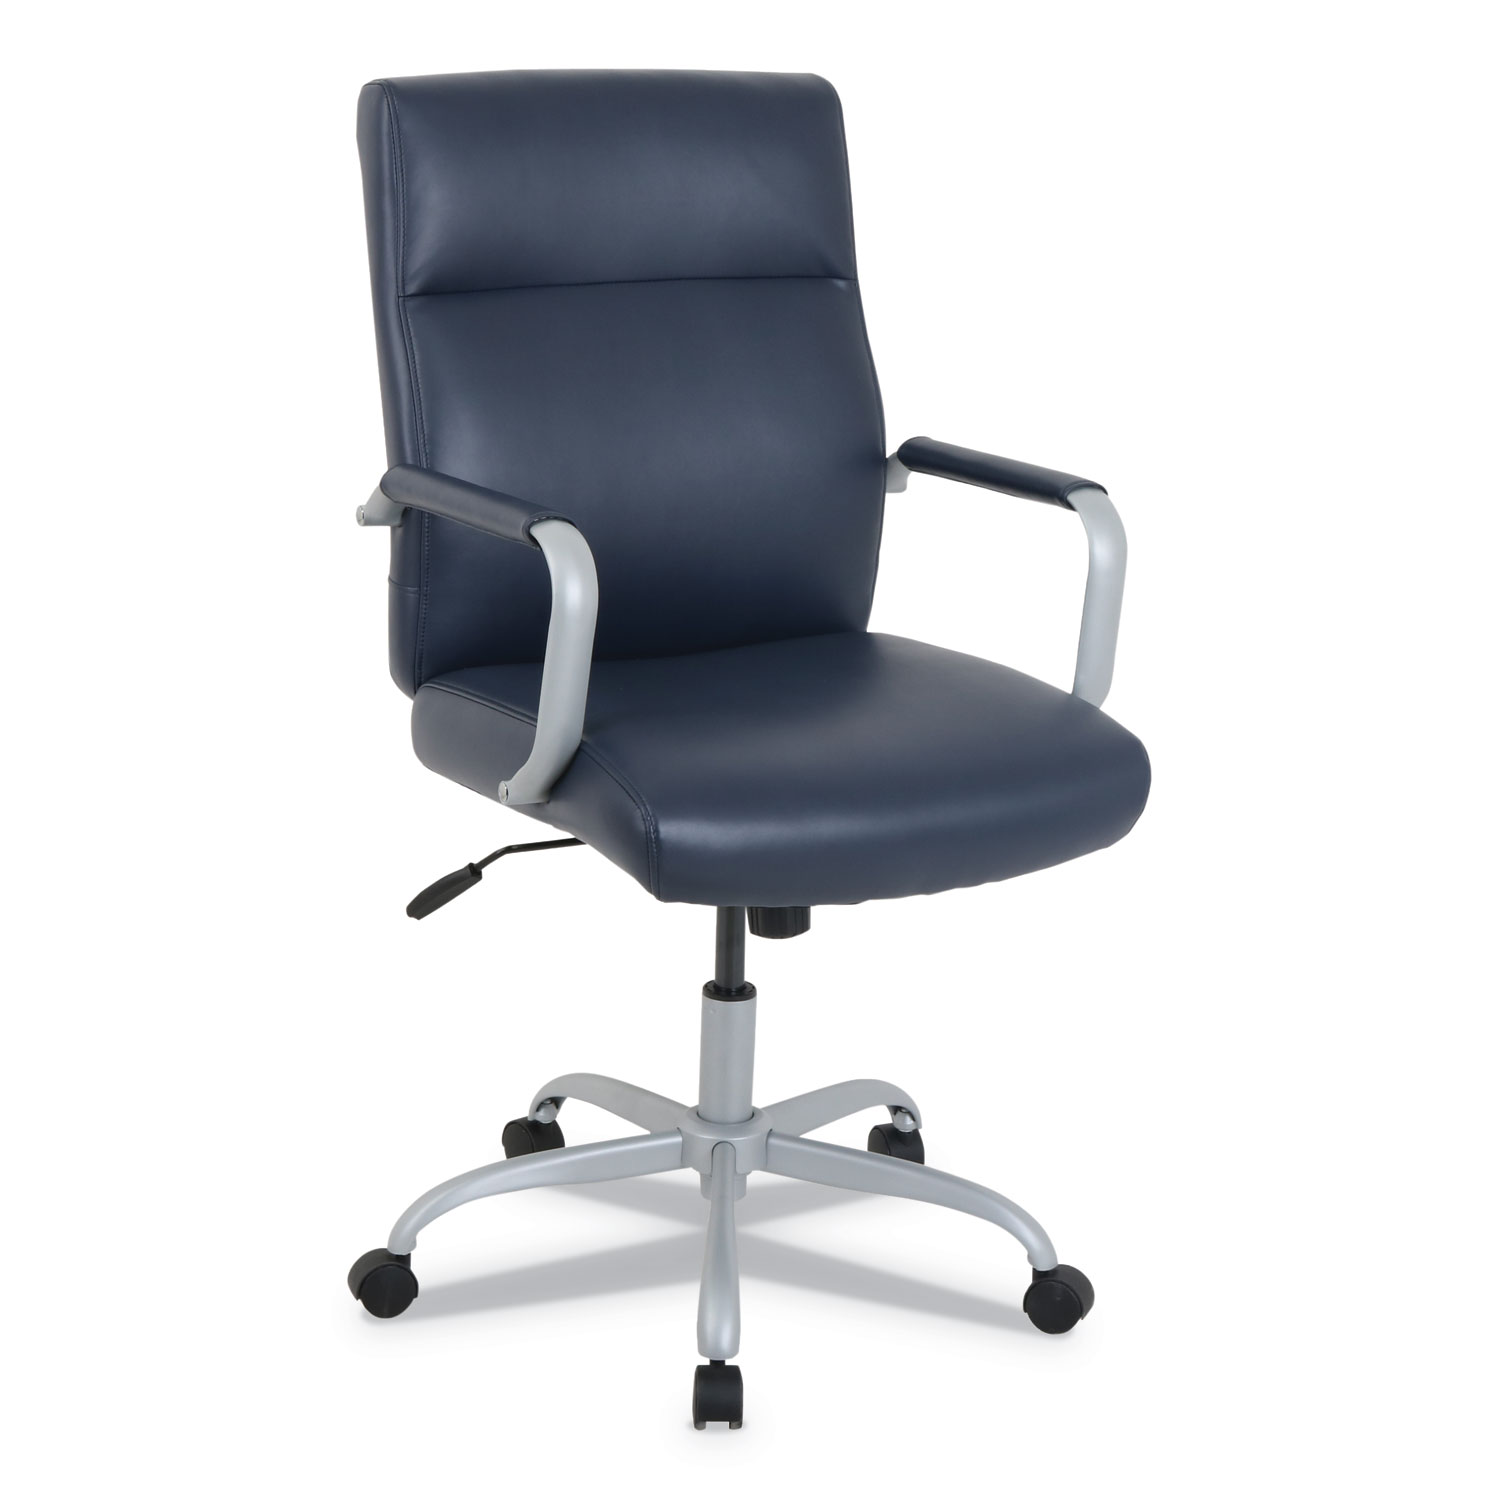  Alera KA24129 kathy ireland OFFICE by Alera Manitou High-Back Leather Office Chair, Up to 275 lbs., Navy Seat/Back, Smoking Gray Base (ALEKA24129) 